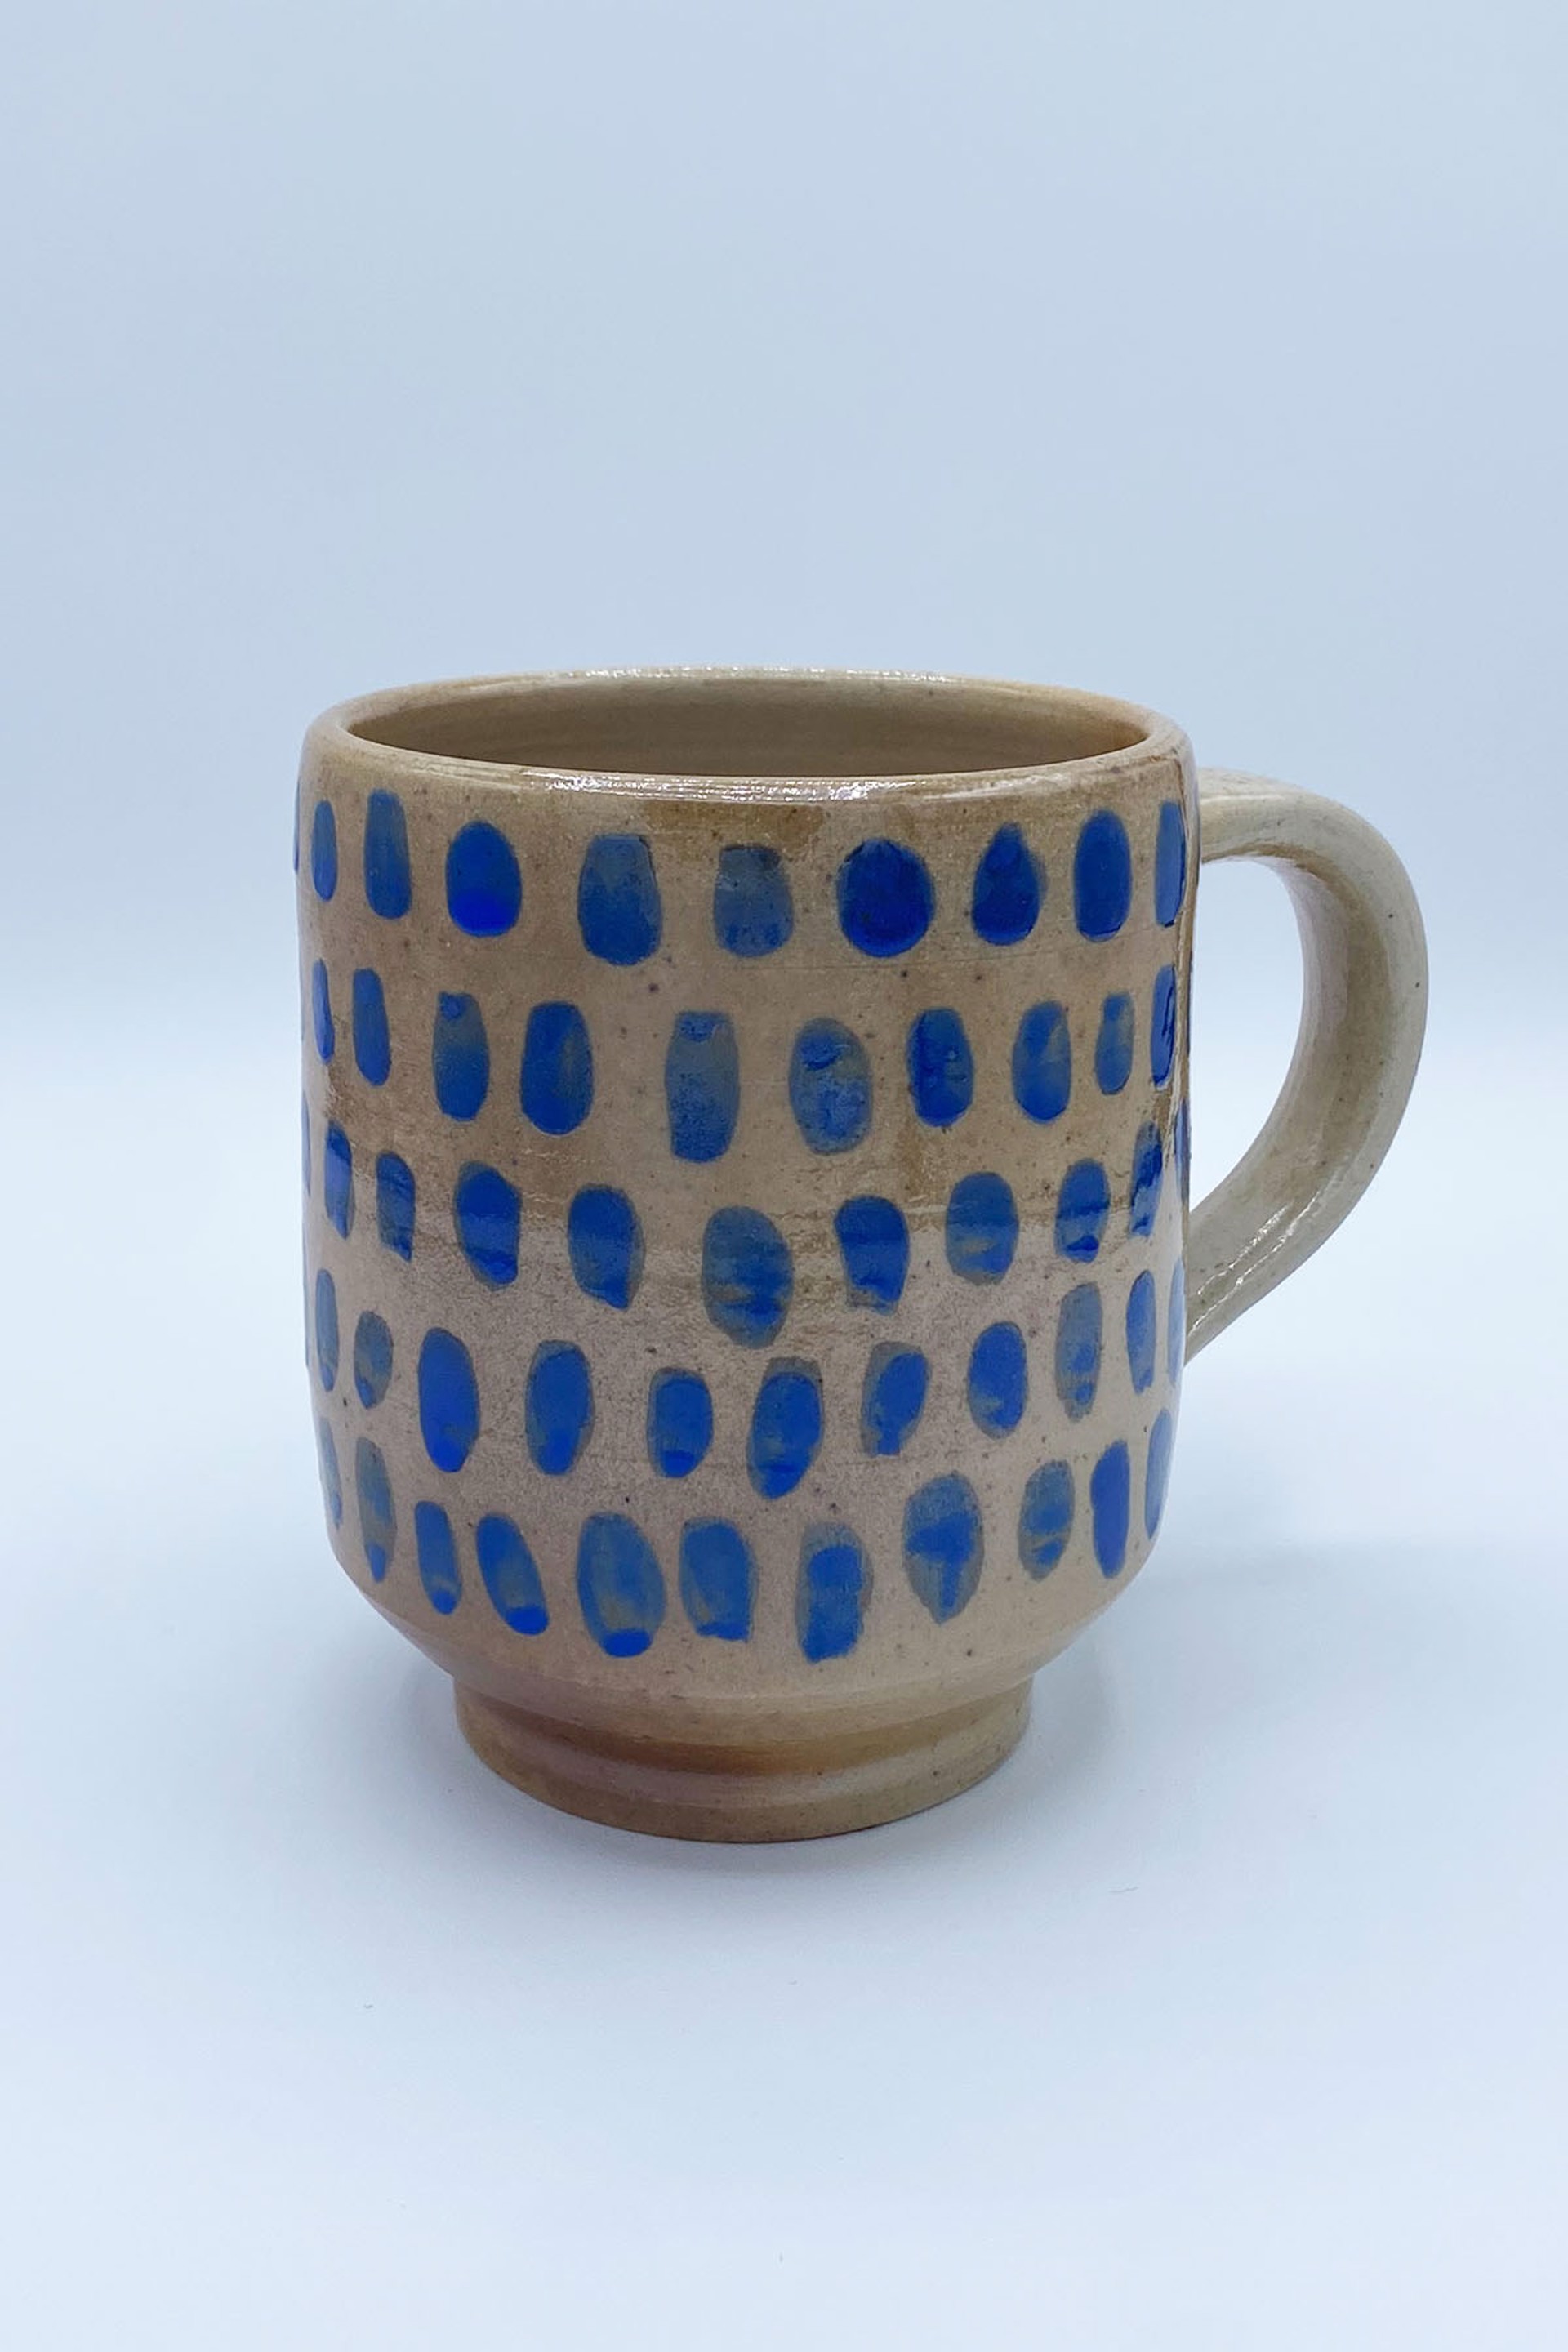 Mug 9 by Laura Cooke